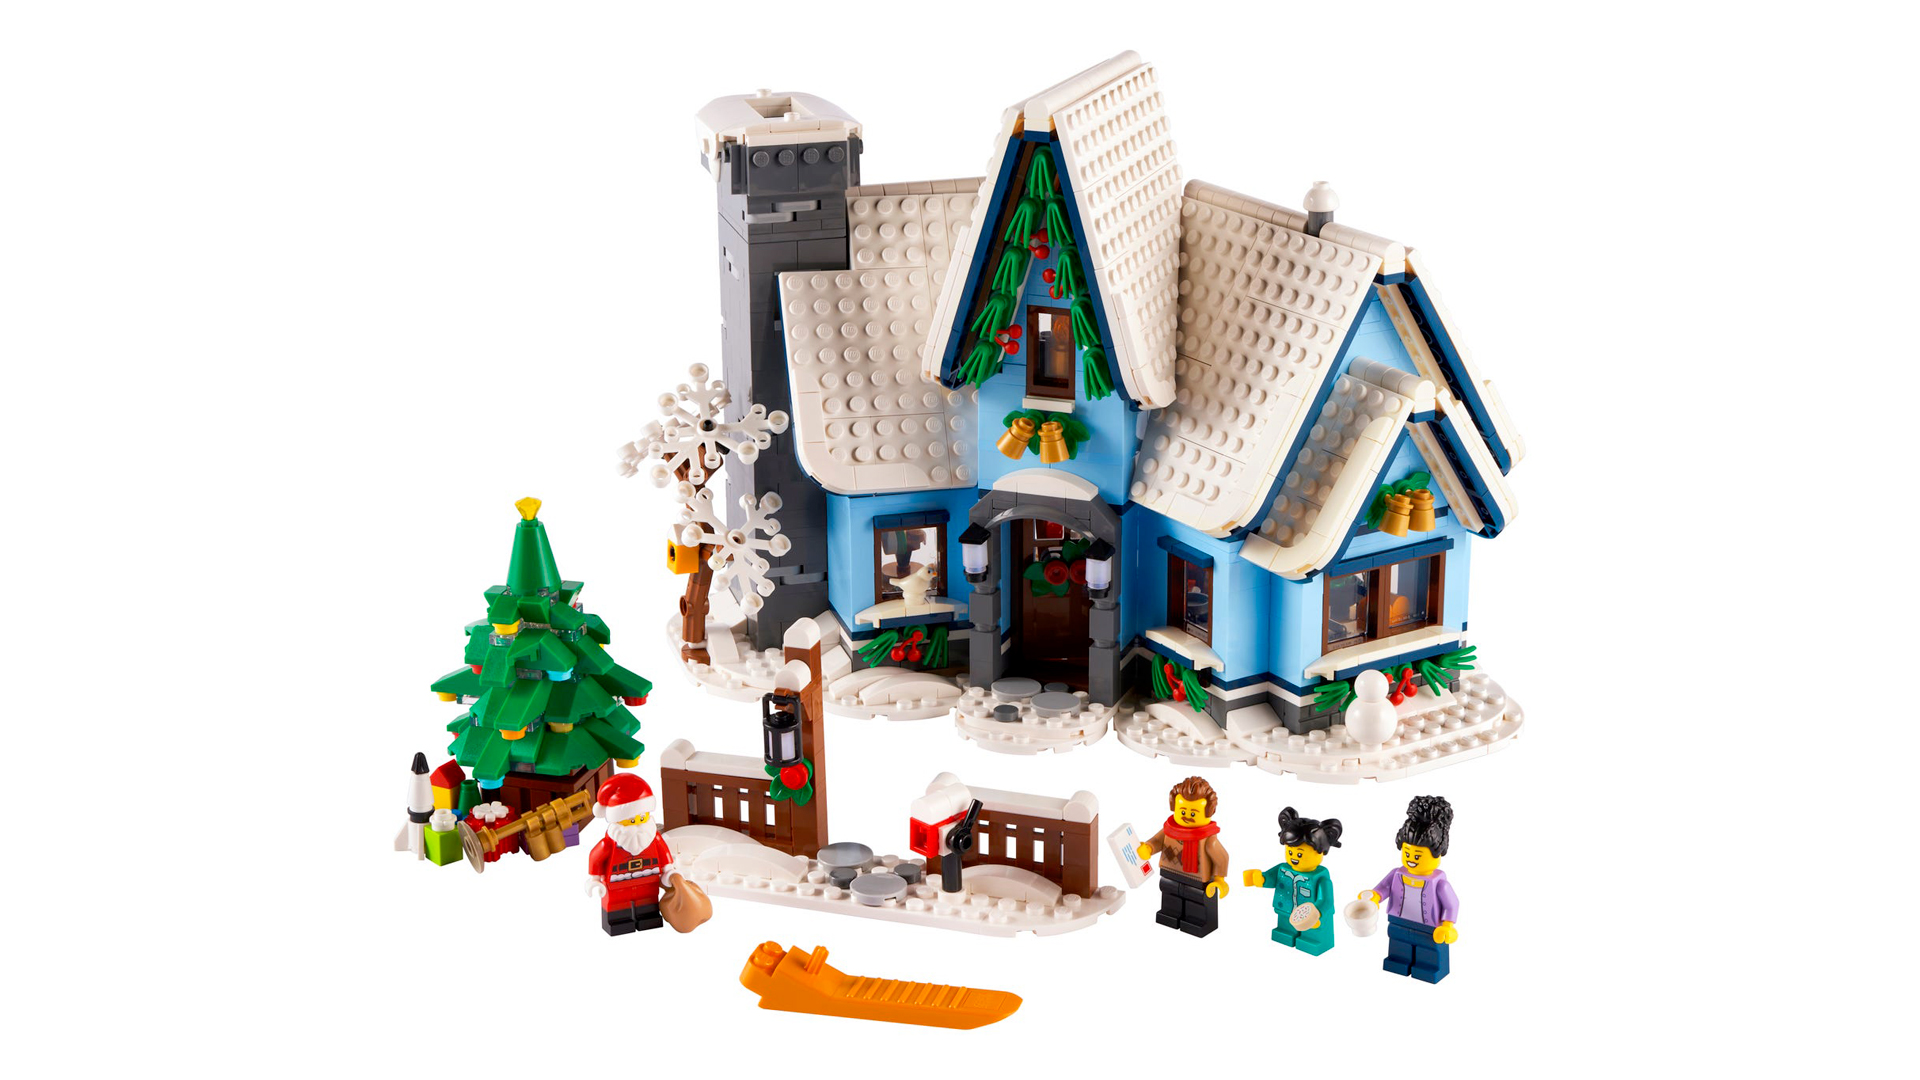 Regali LEGO a tema Natale - Regali per tutti